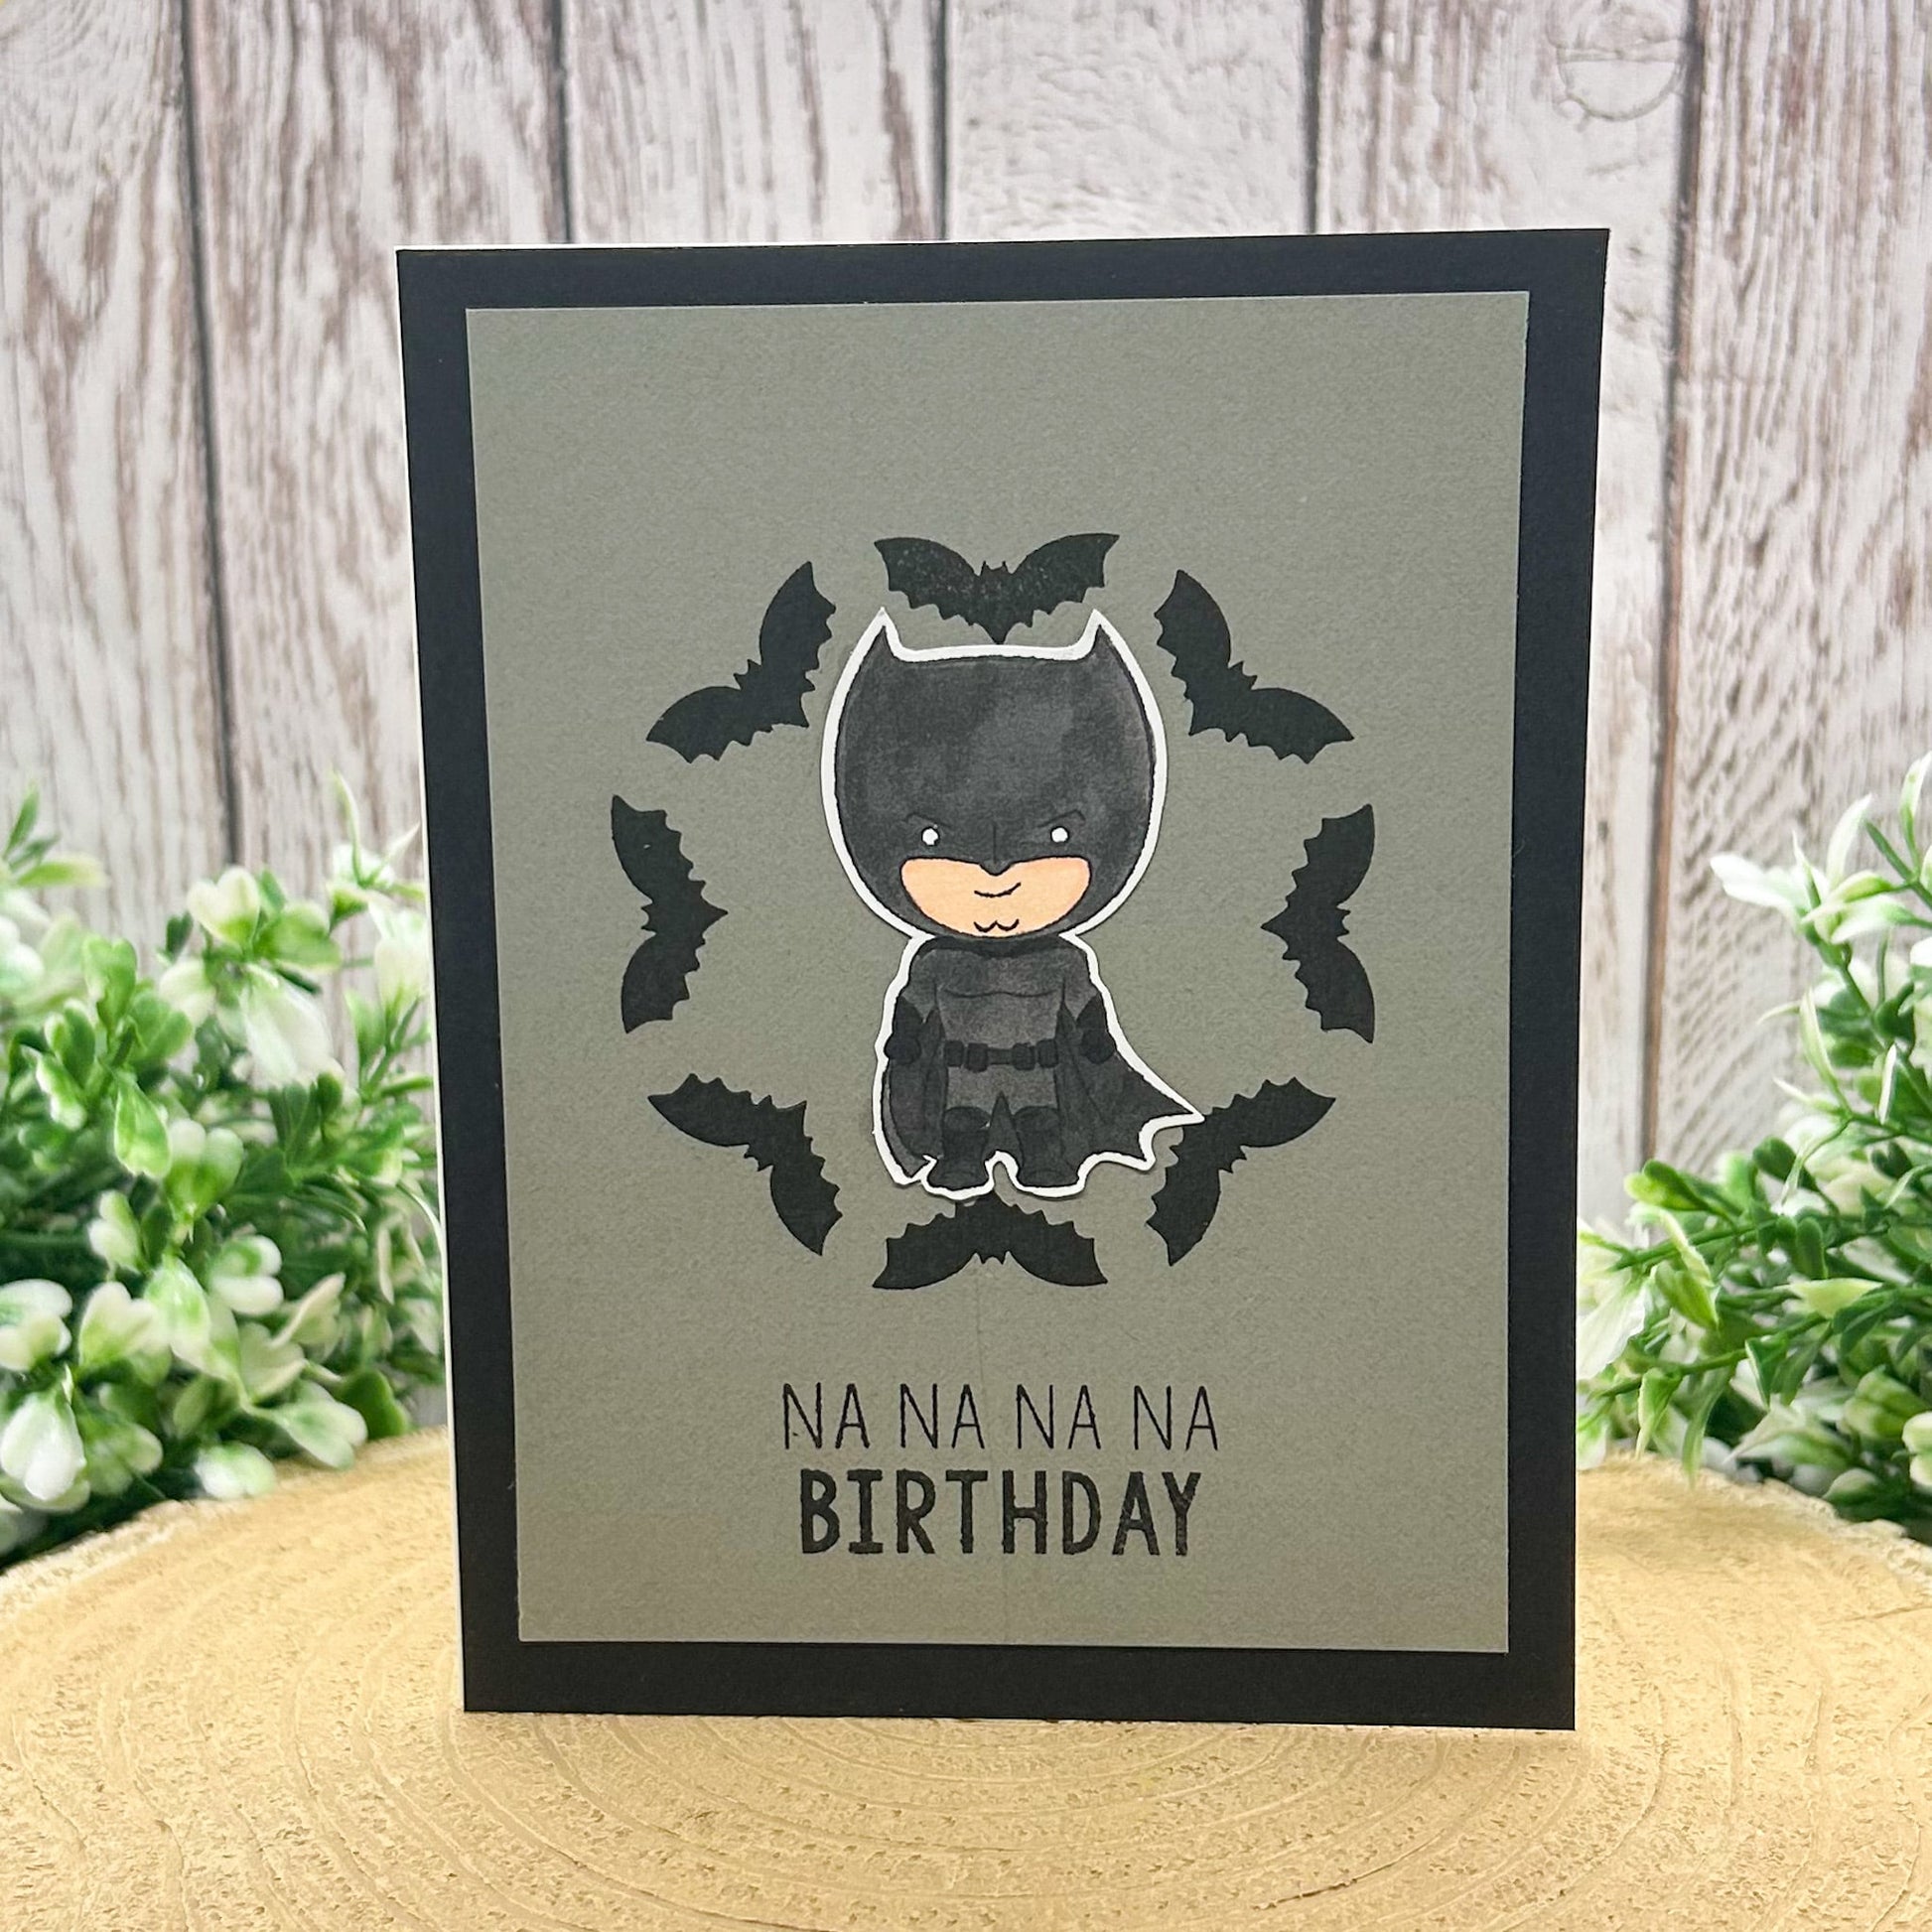 Bat Guy Character Themed Handmade Birthday Card